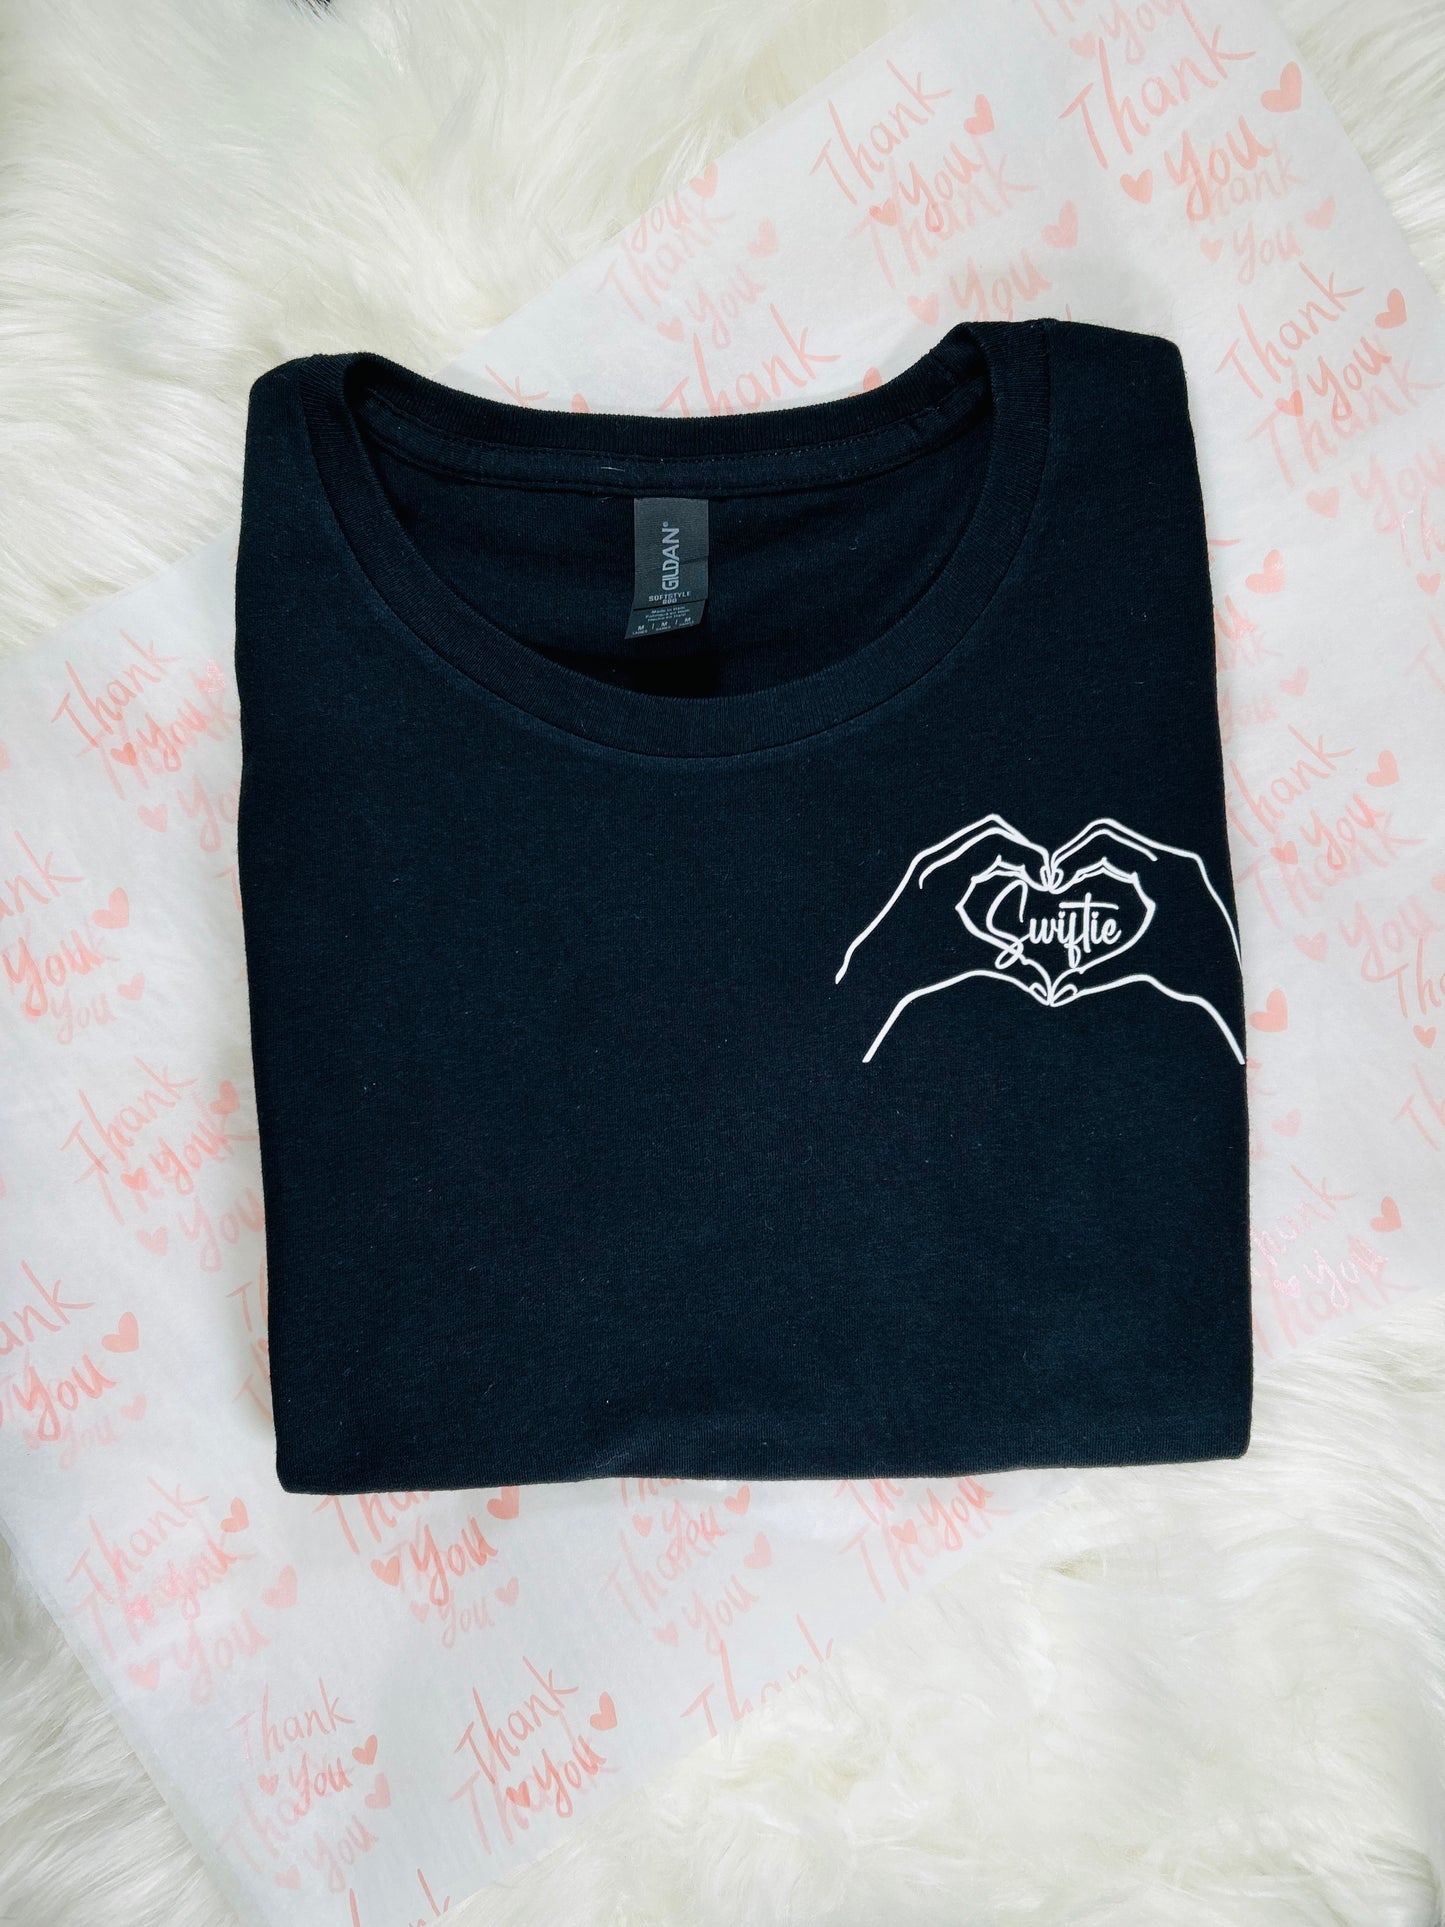 Swiftie Women’s T-Shirt